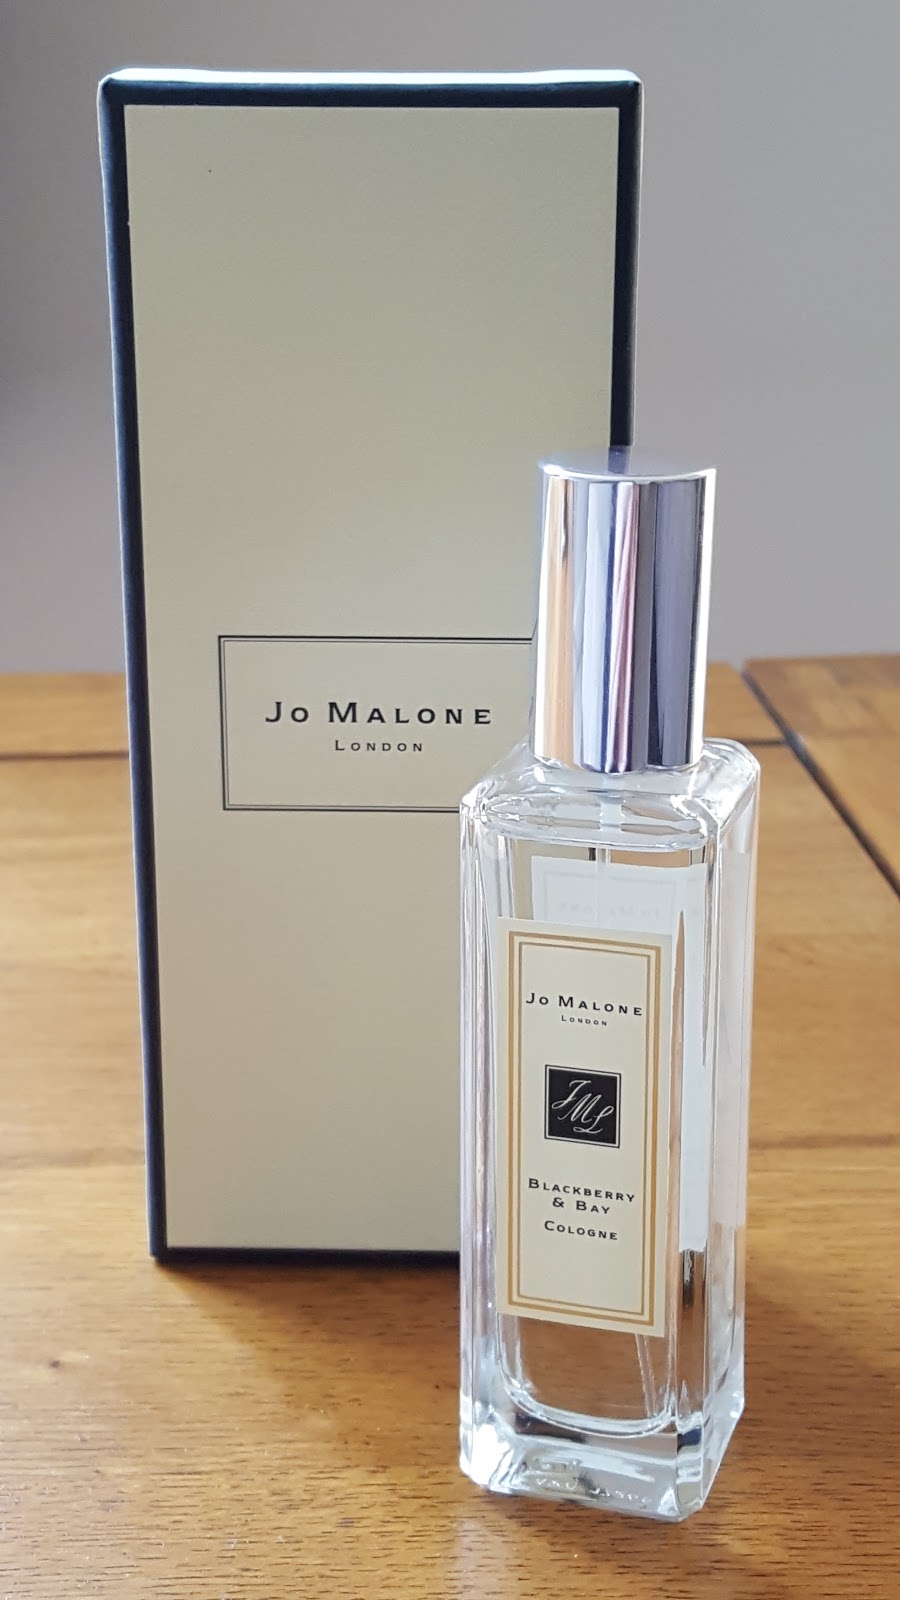 Jo Malone London Blackberry & Bay - The Perfect Autumnal Fragrance